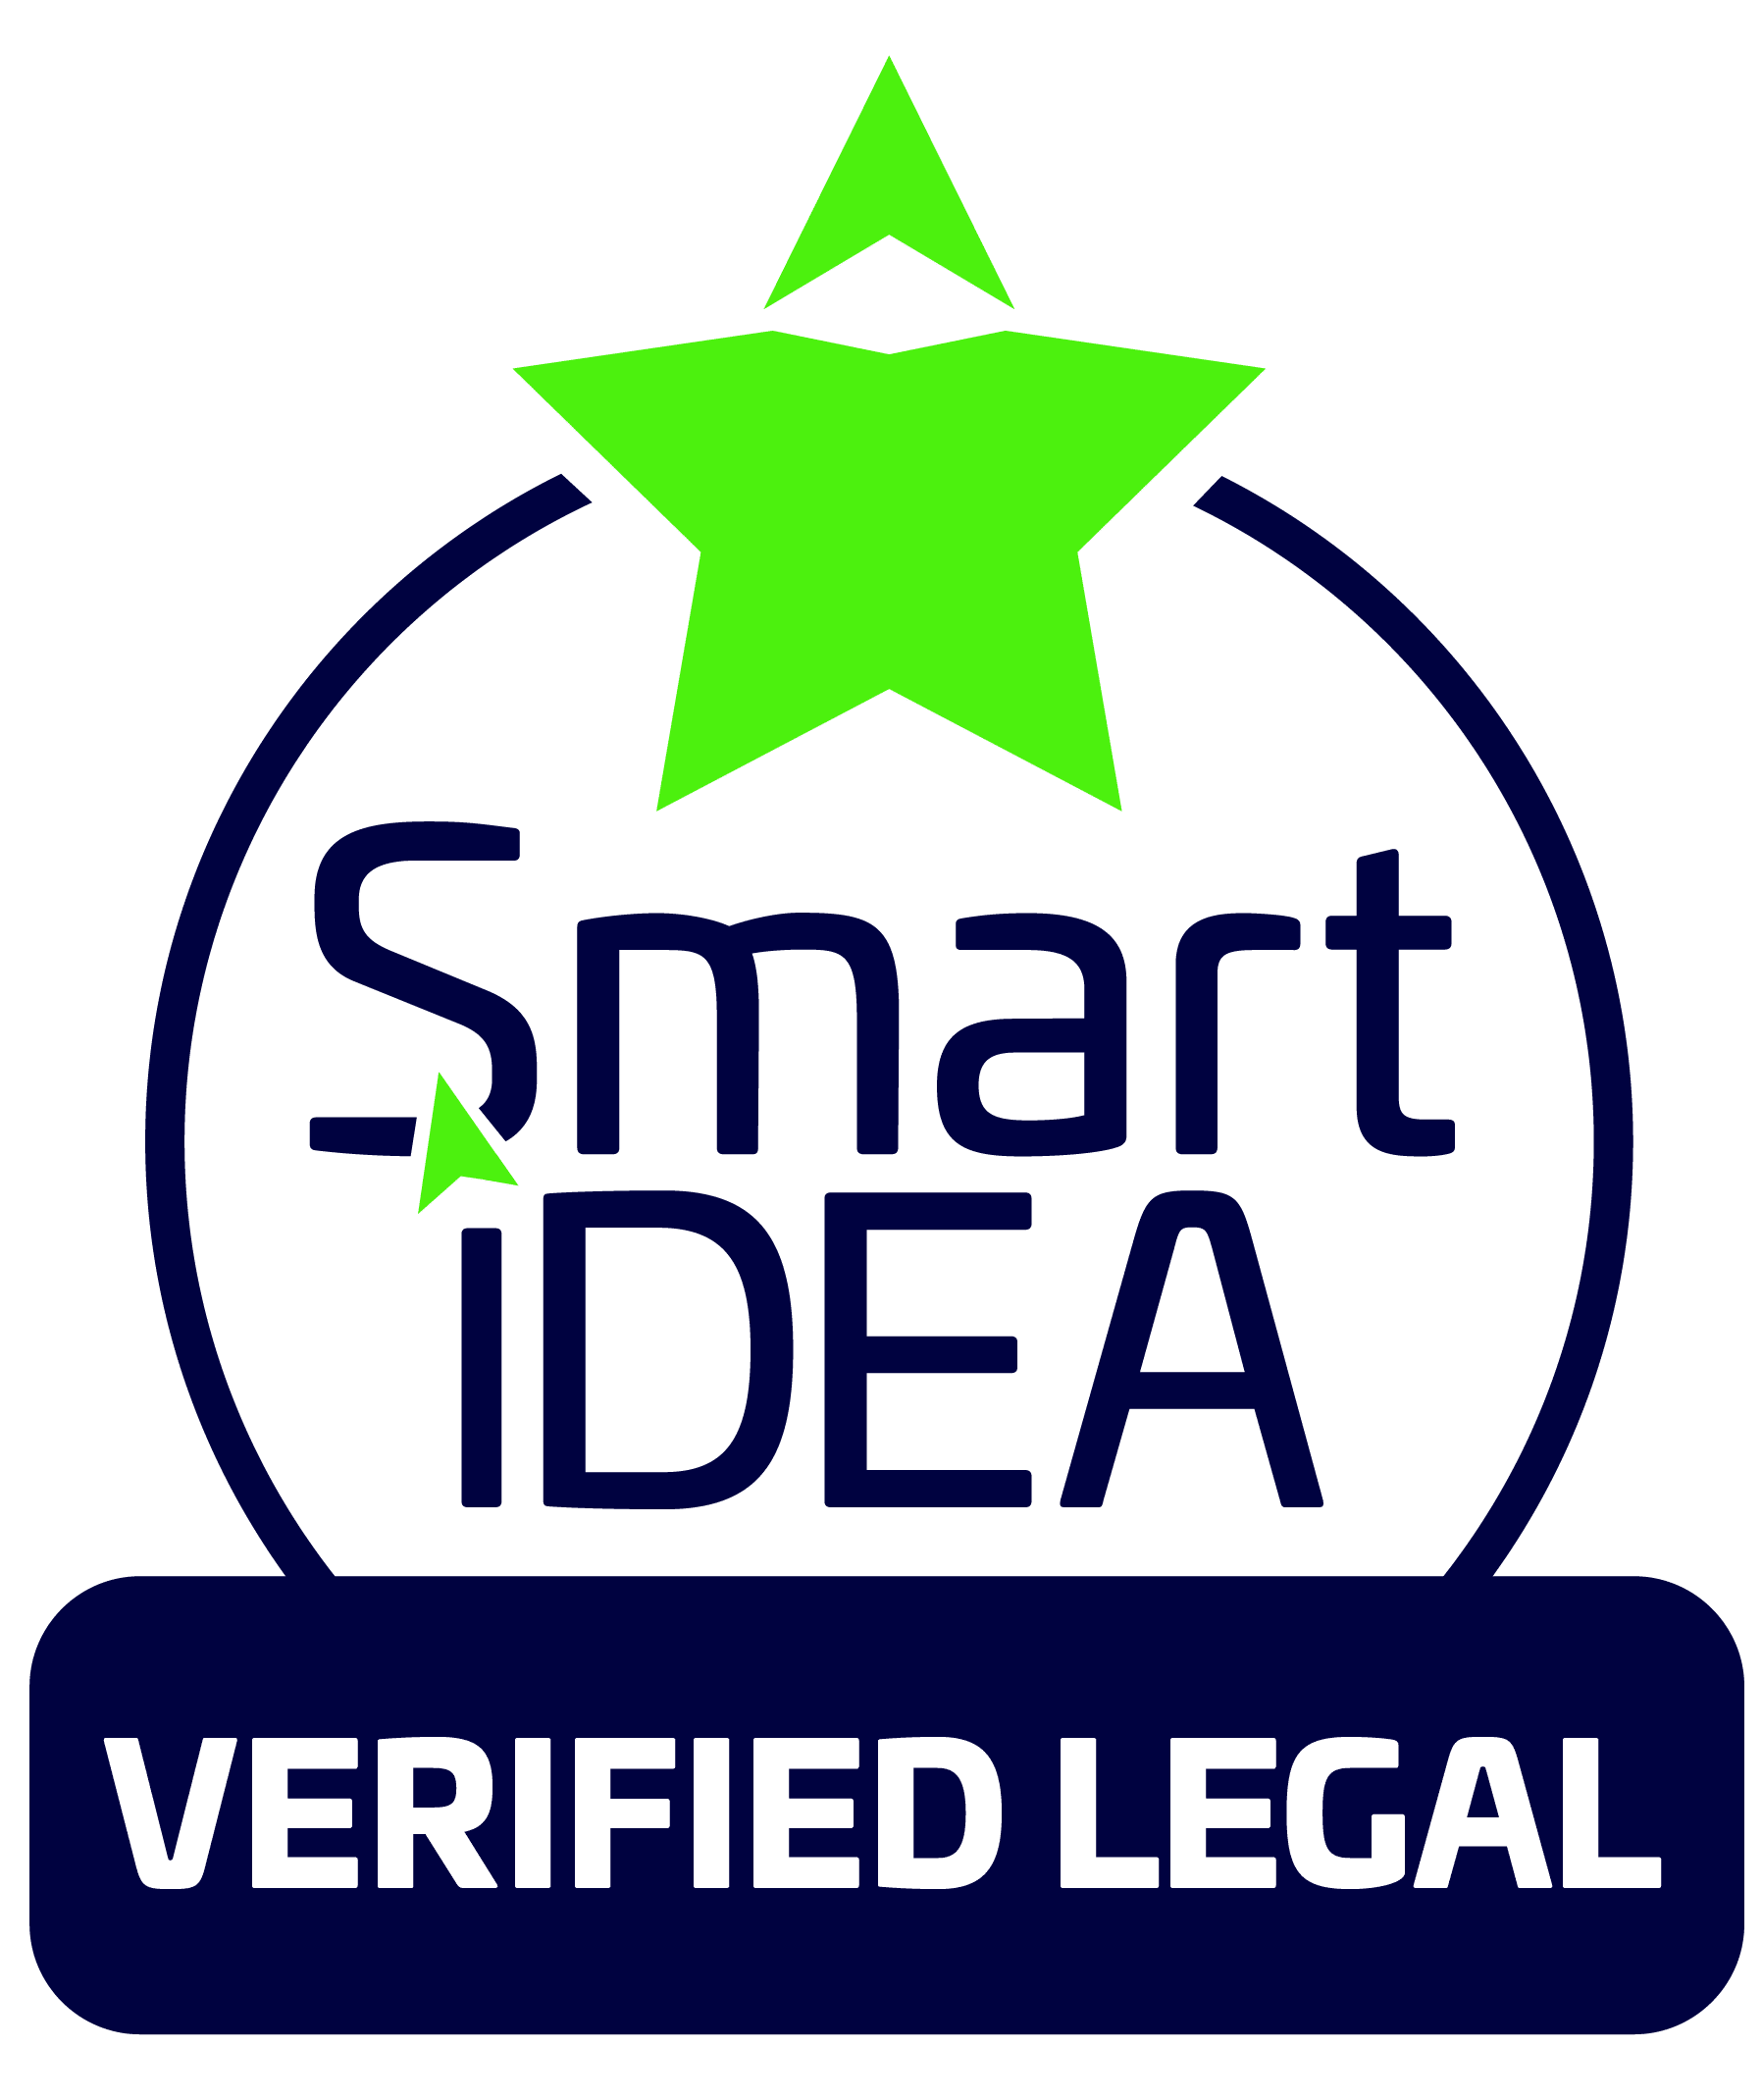 Smart iDEA Verified Legal Seal